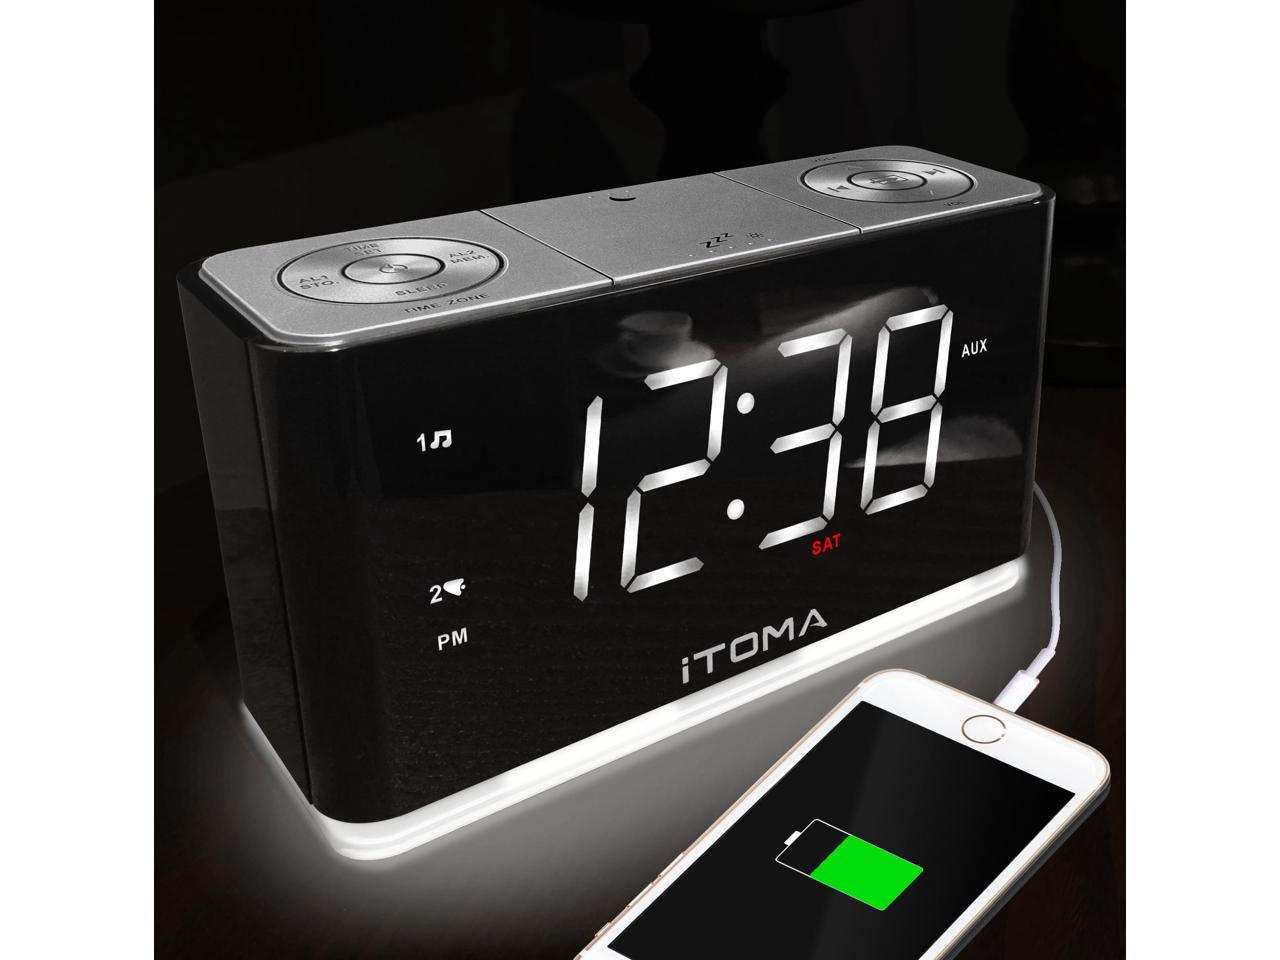 Auto & Manual Dimmer 1.4” White LED Display Alarm Clock FM Radio Clock Radio Cell Phone USB Charge Port Night Light Snooze Dual Alarm Sleep Timer iTOMA CKS507 